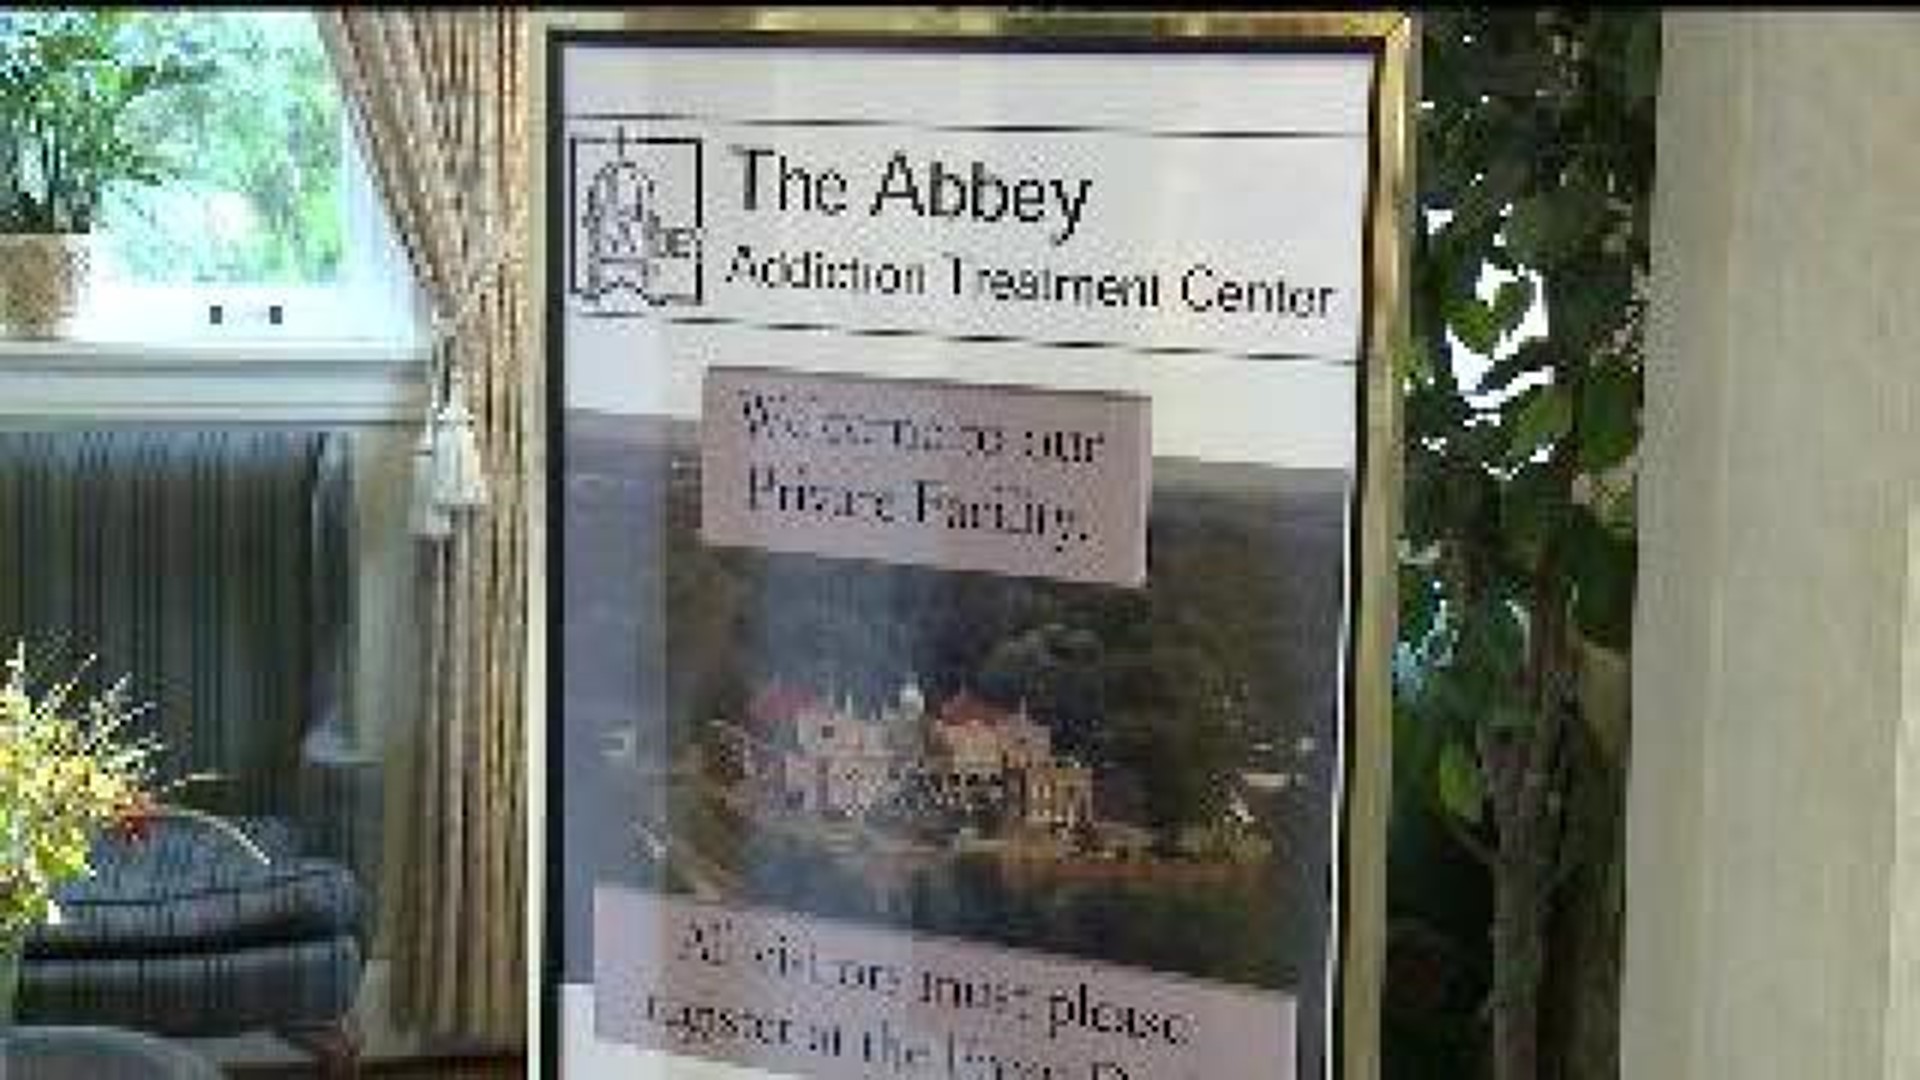 Abbey celebrates five years